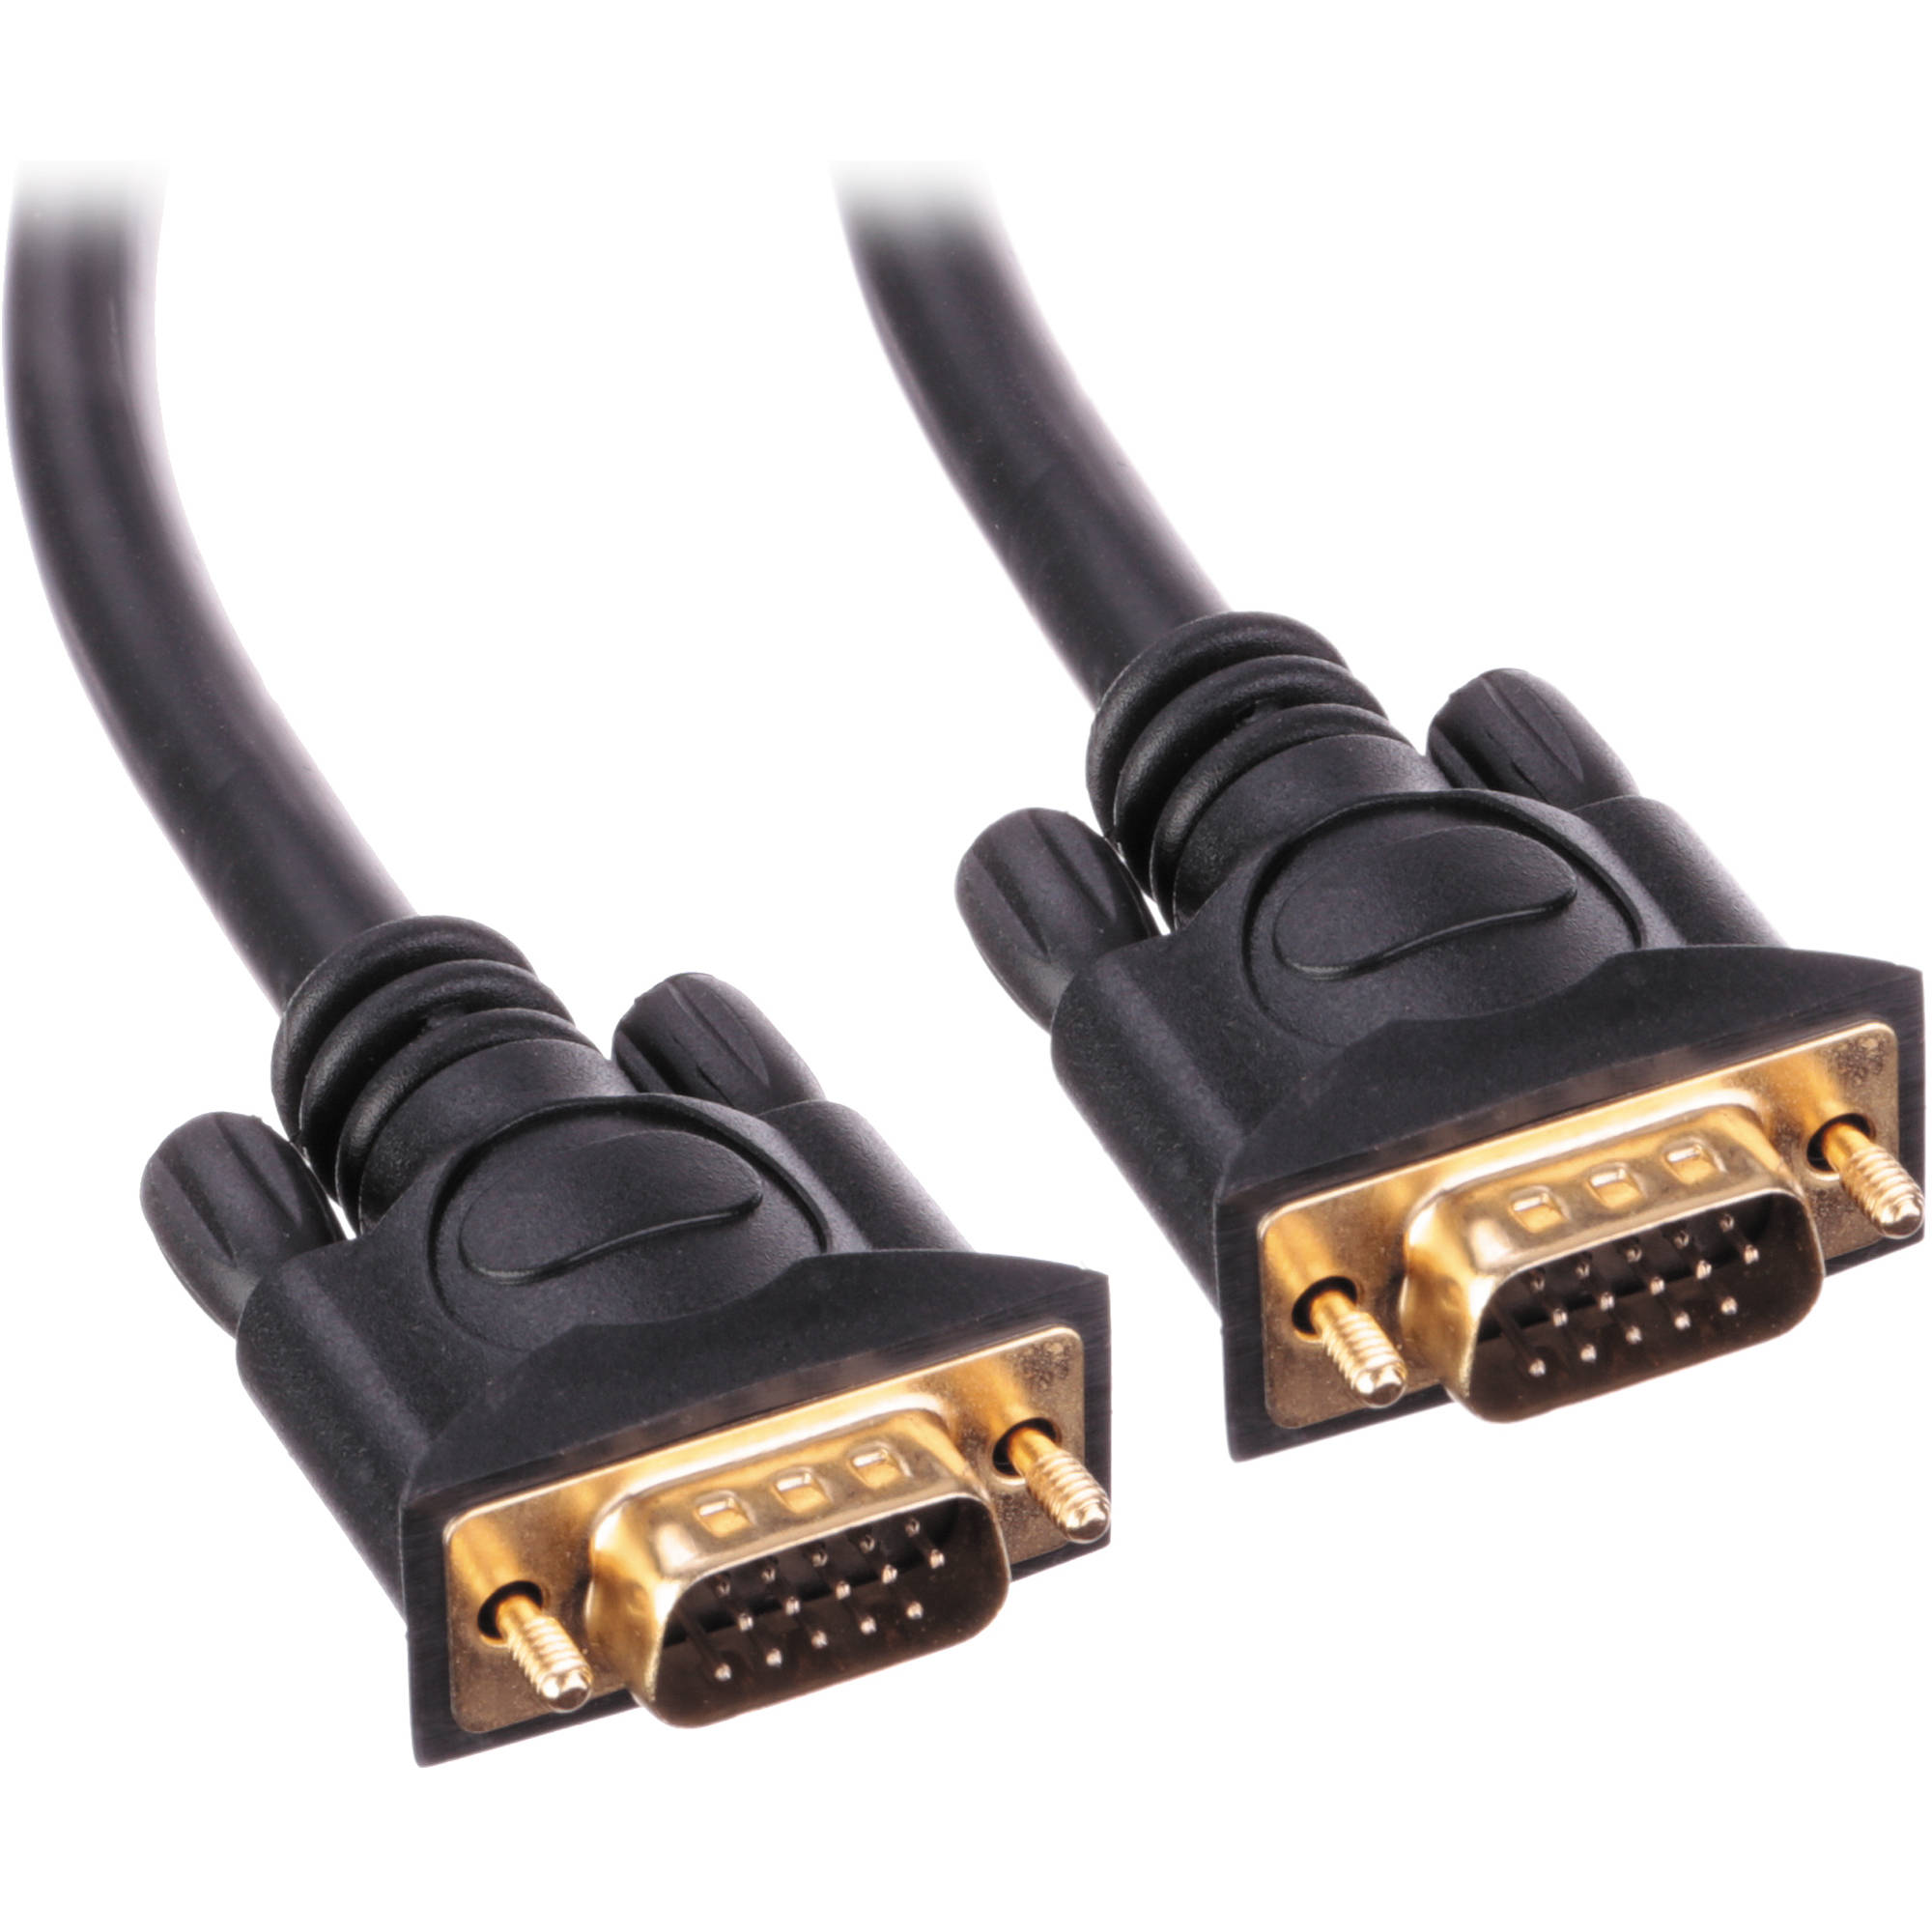 Pearstone Premium VGA Male to VGA Male Cable (35')